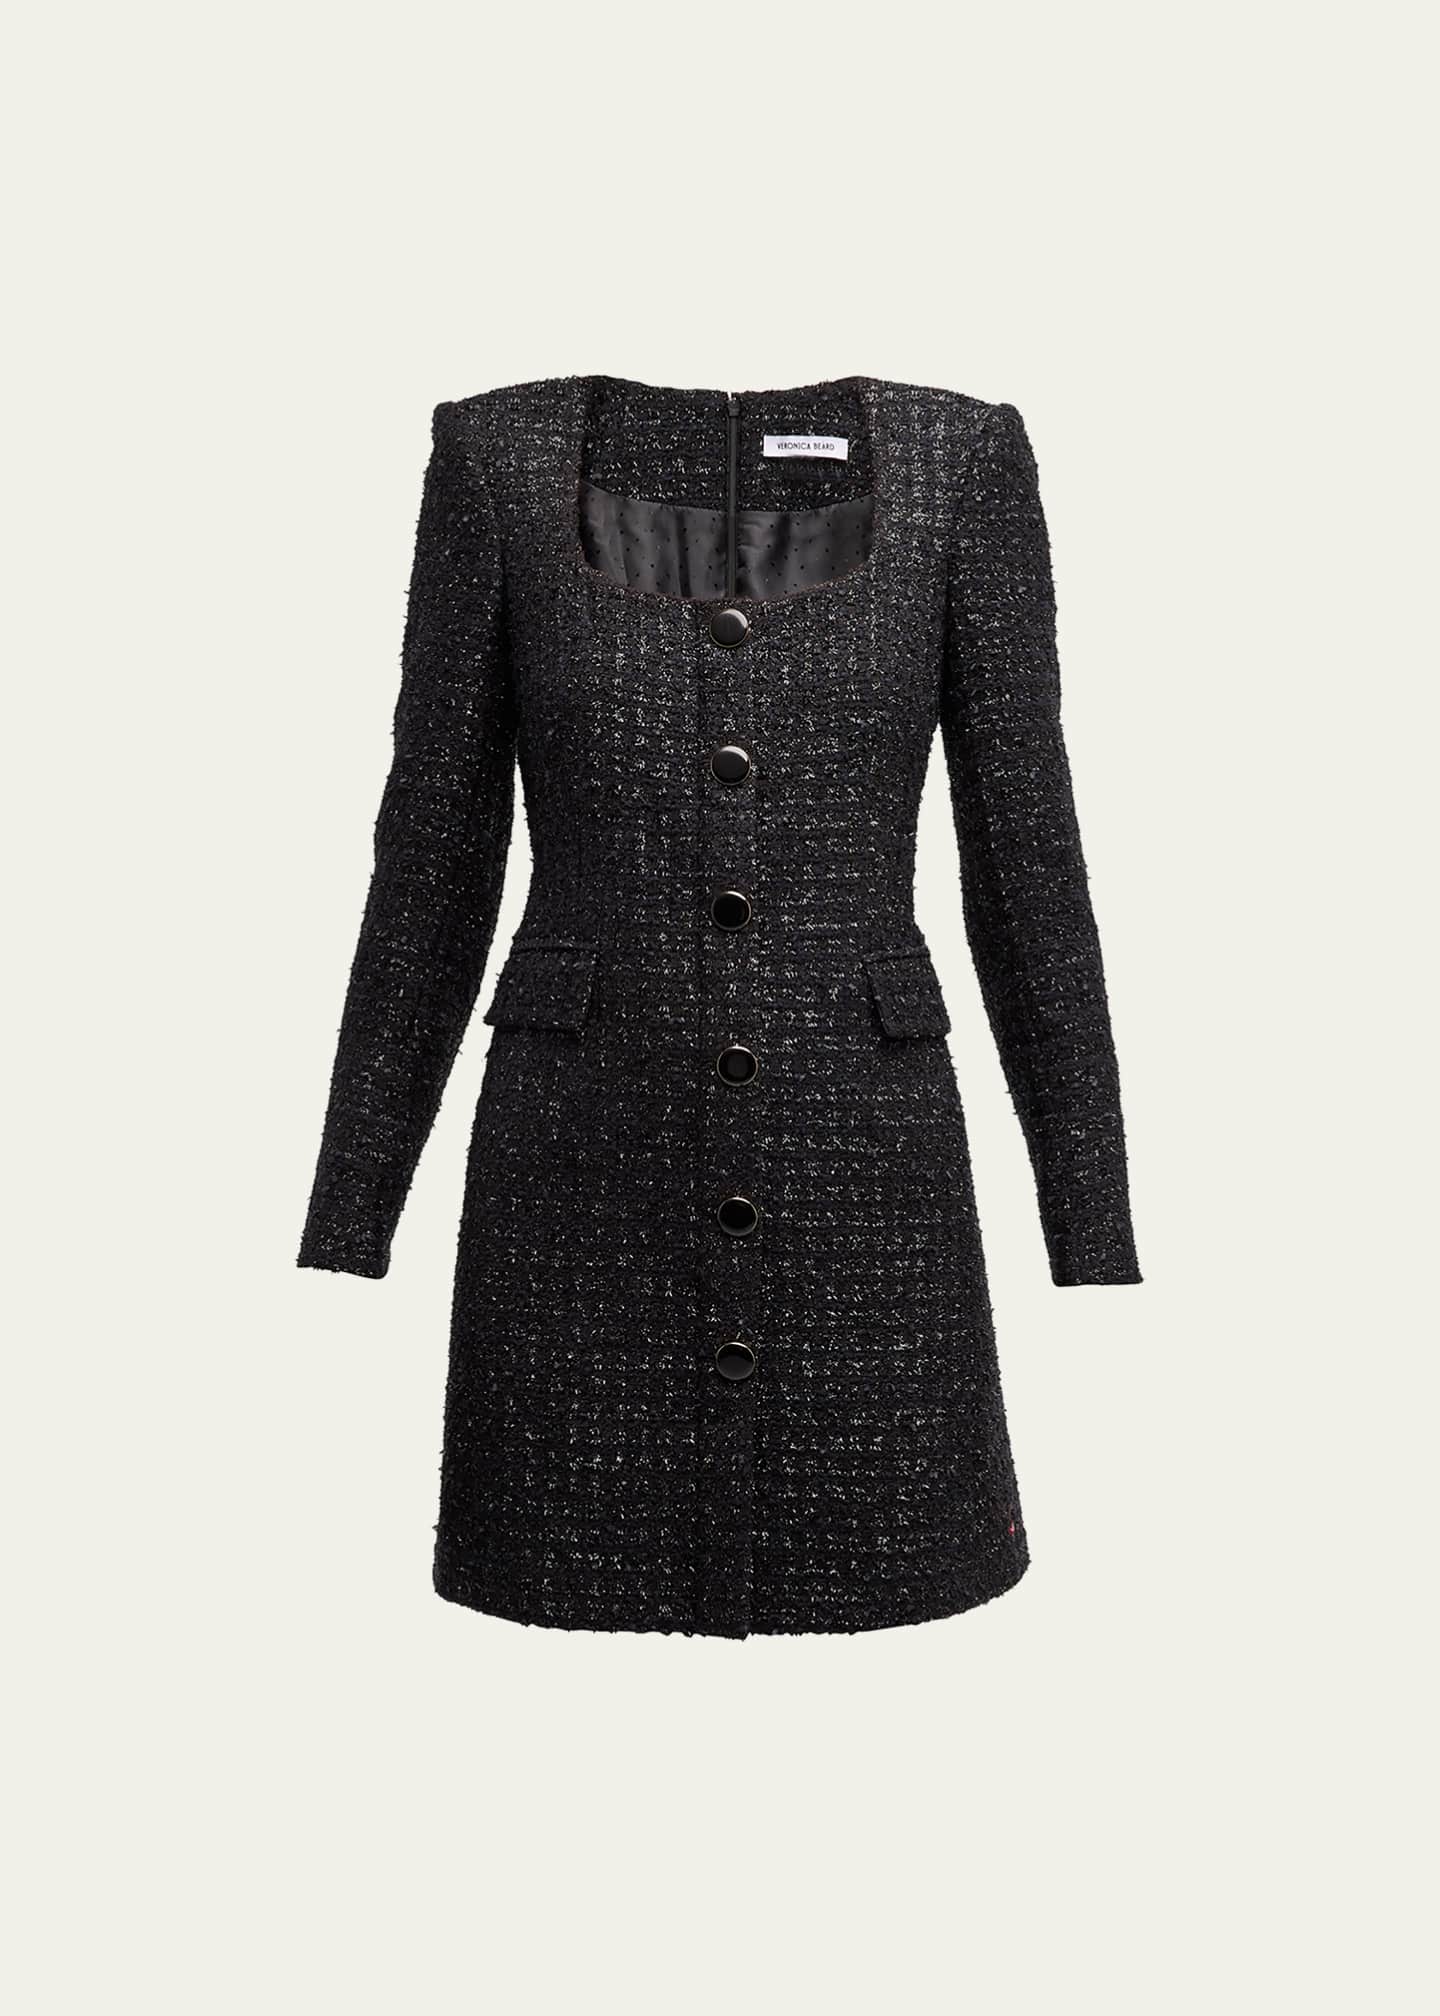 Veronica Beard Rino Button-Front Tweed Mini Dress